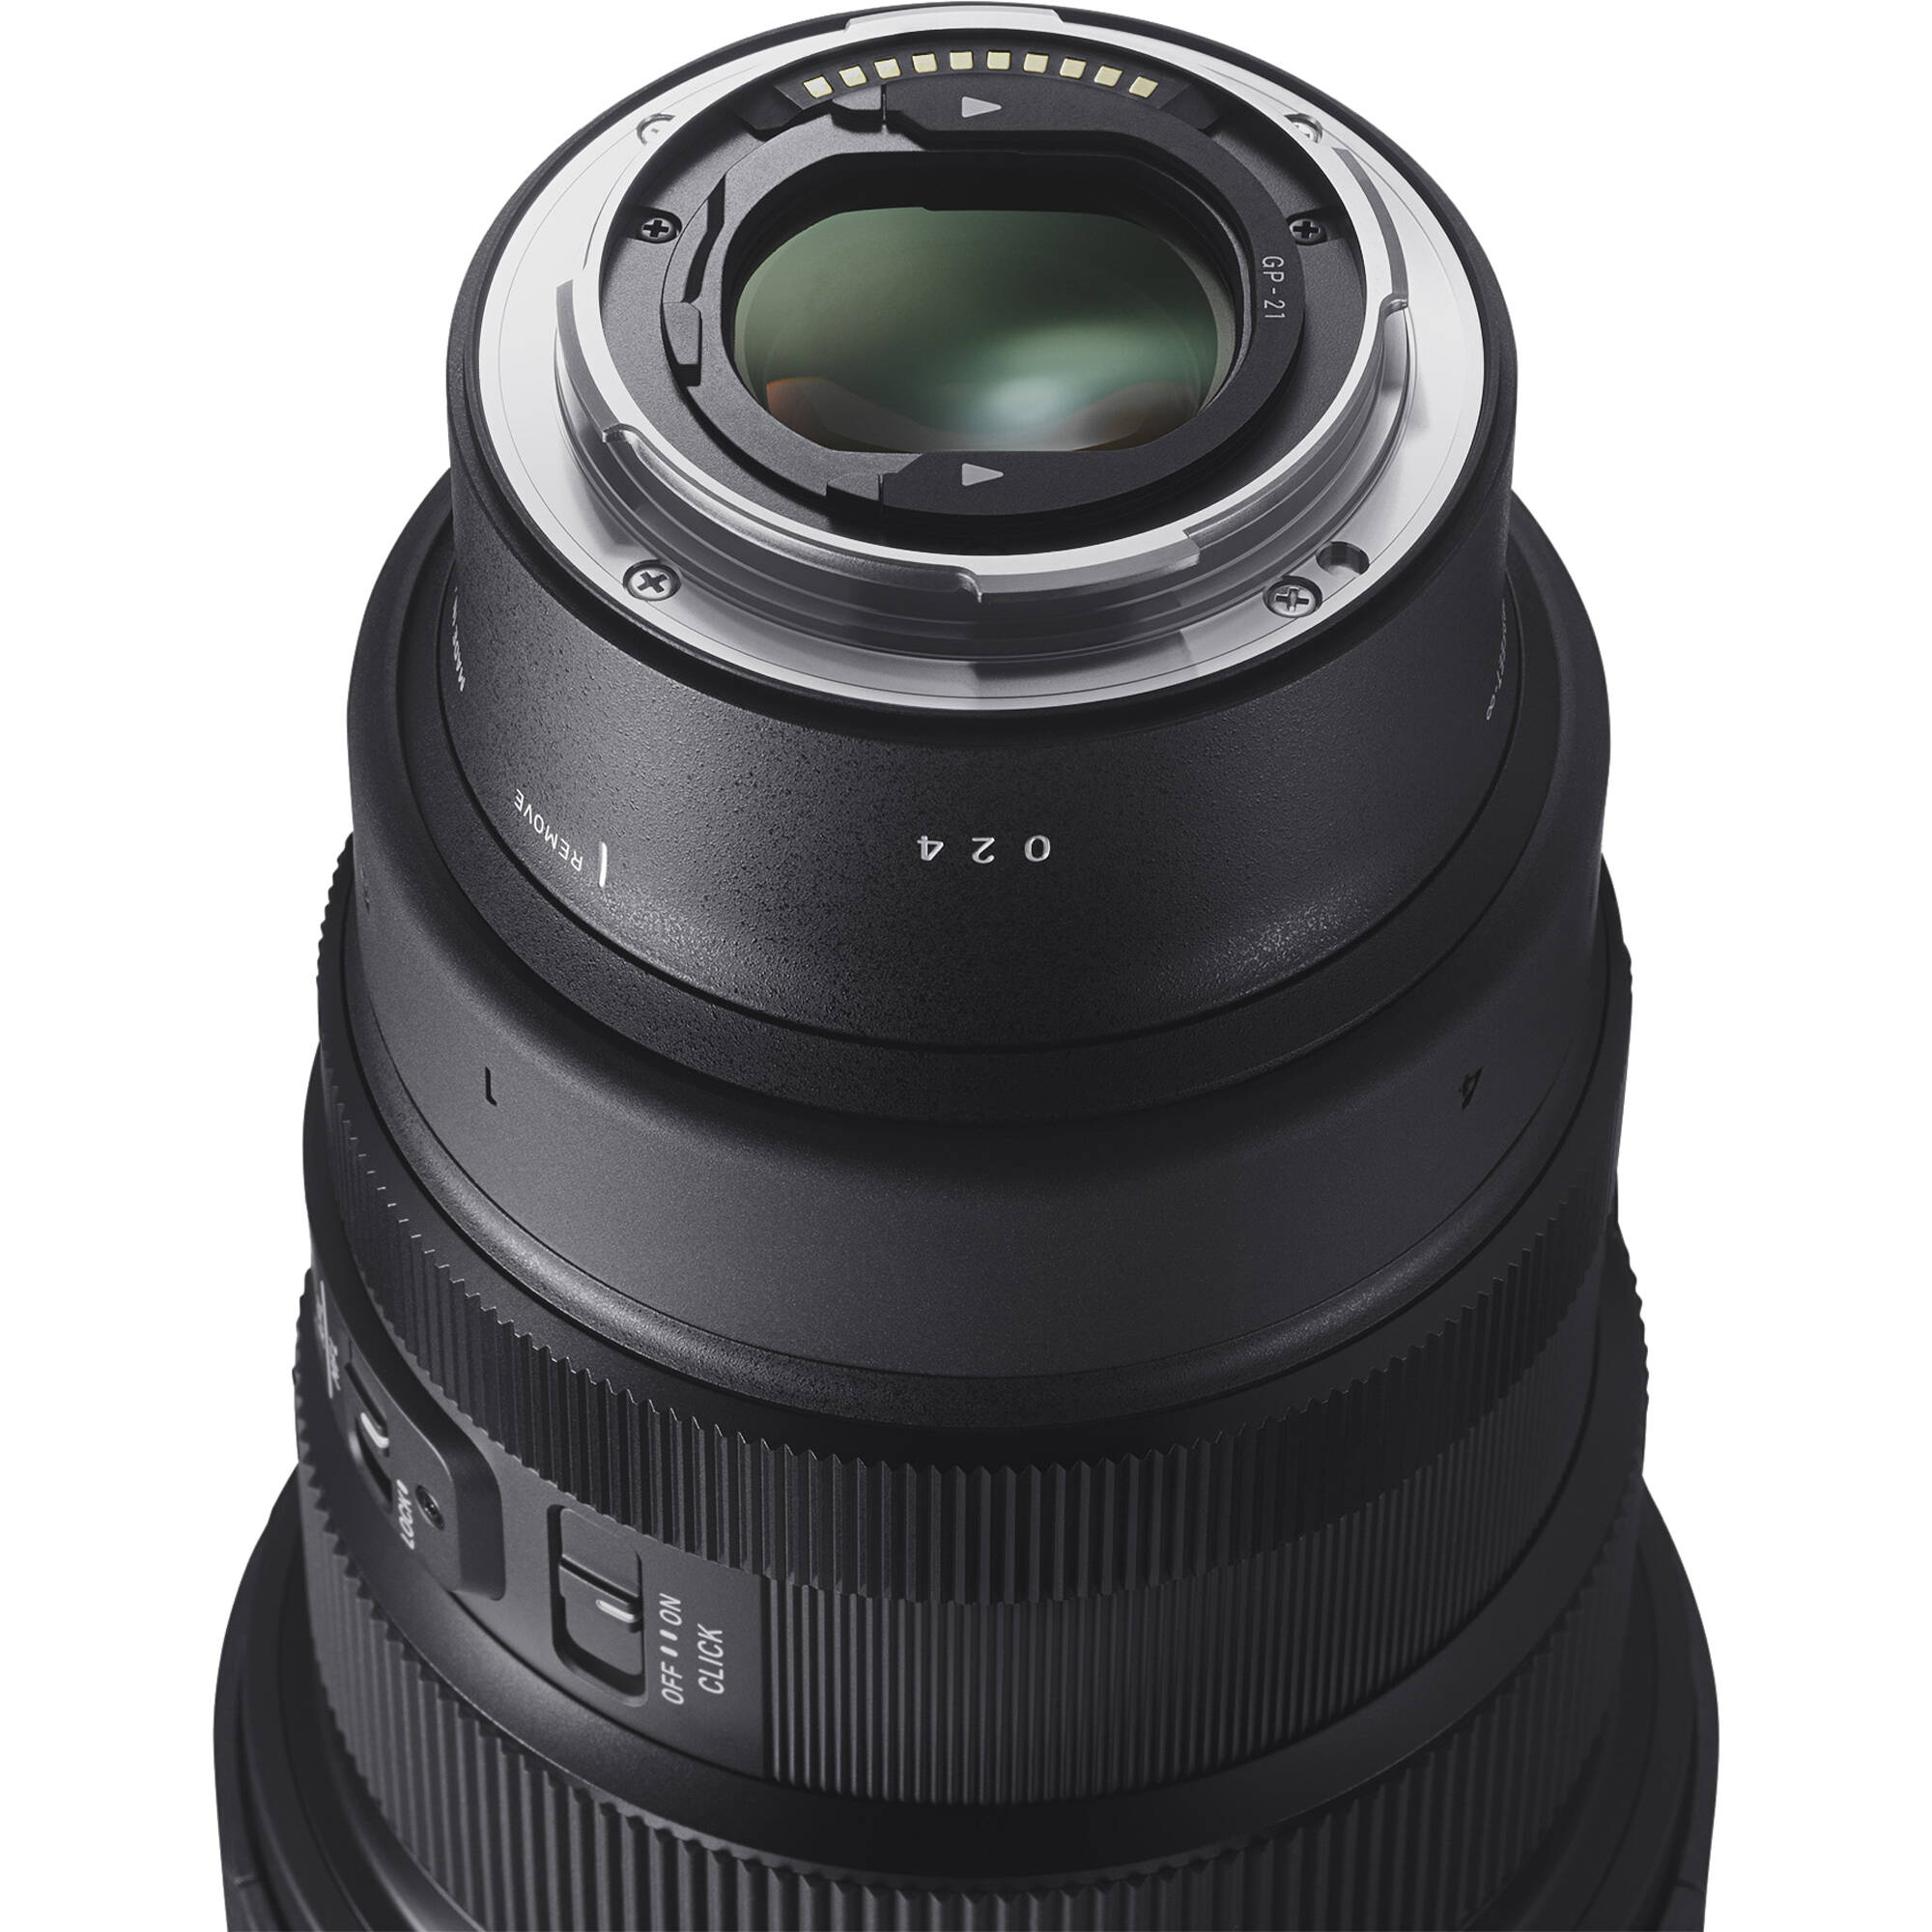 Sigma 15mm f/1.4 DG DN Art Lens - Sony E